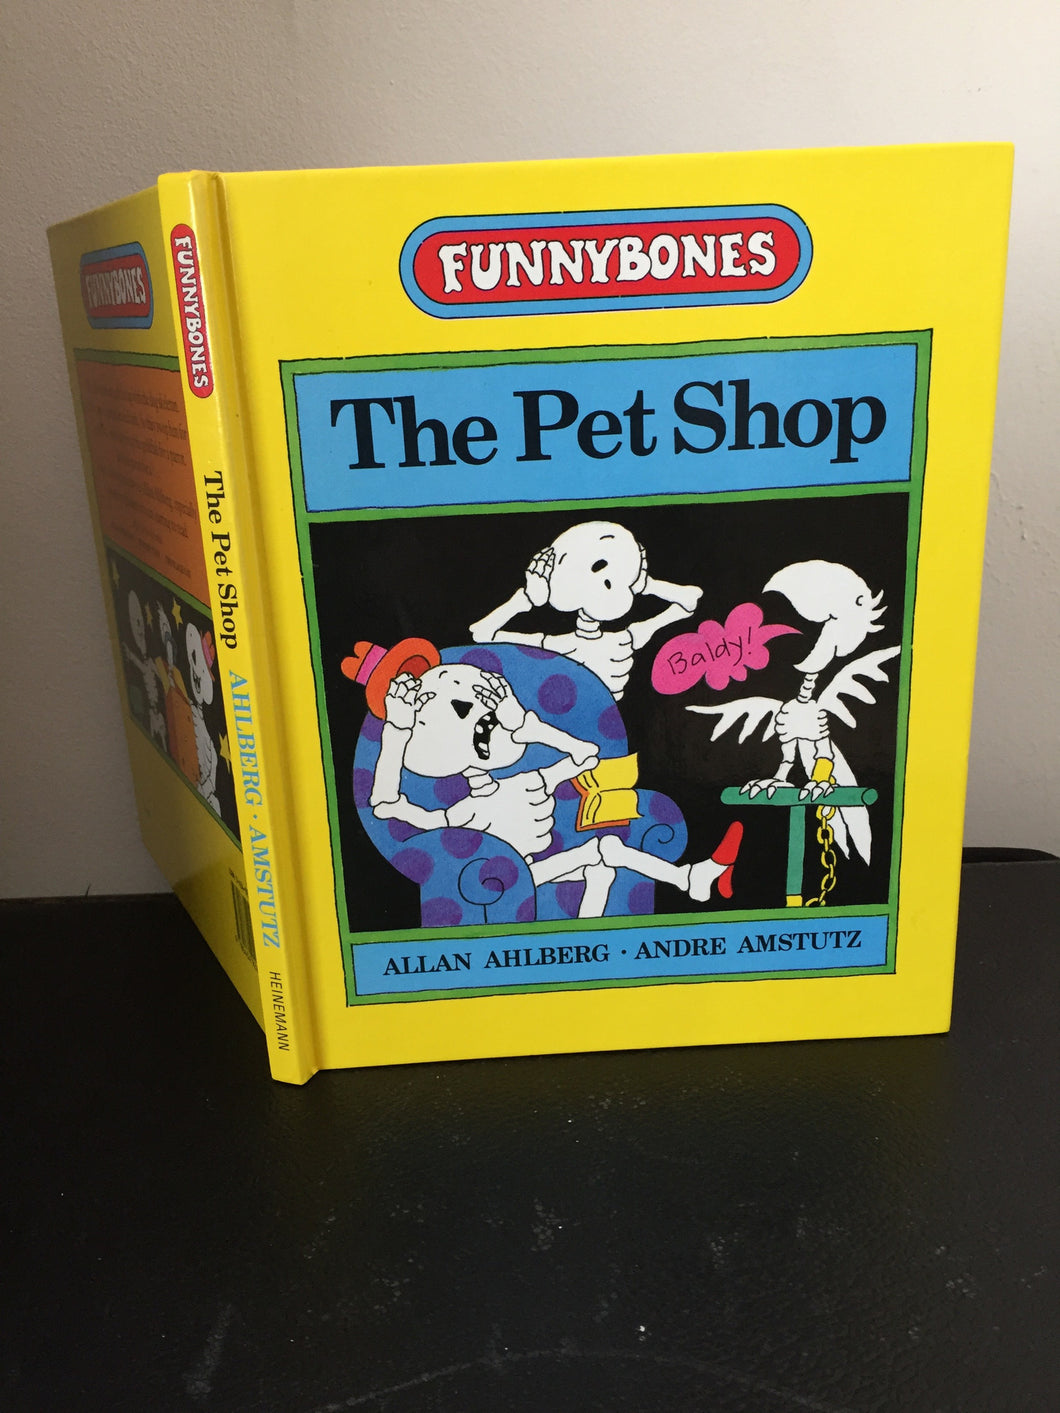 Funnybones - The Pet Shop